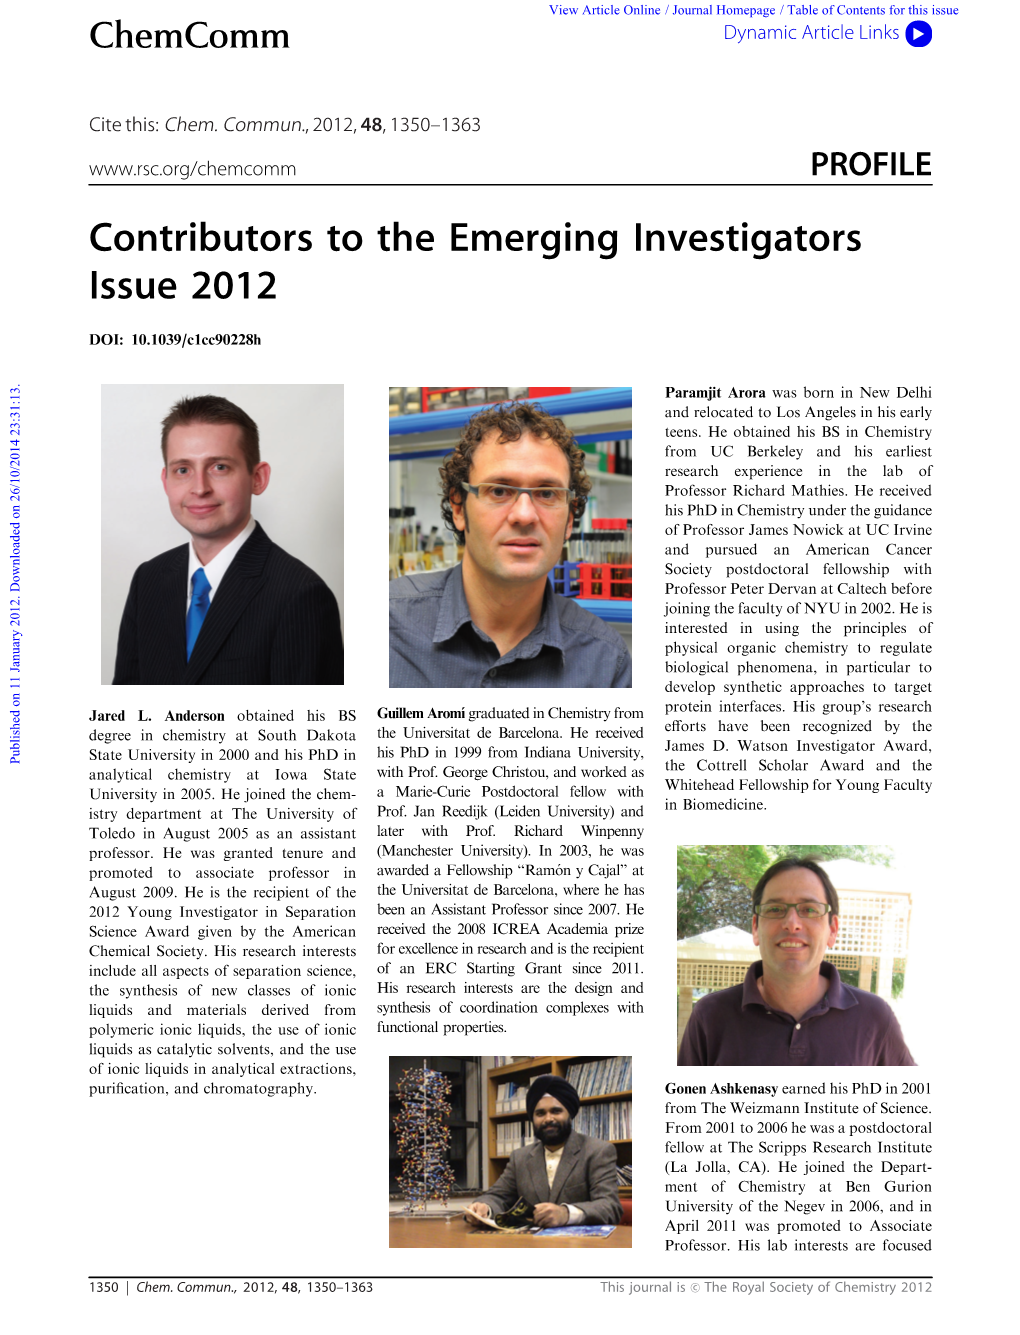 Contributors to the Emerging Investigators Issue 2012